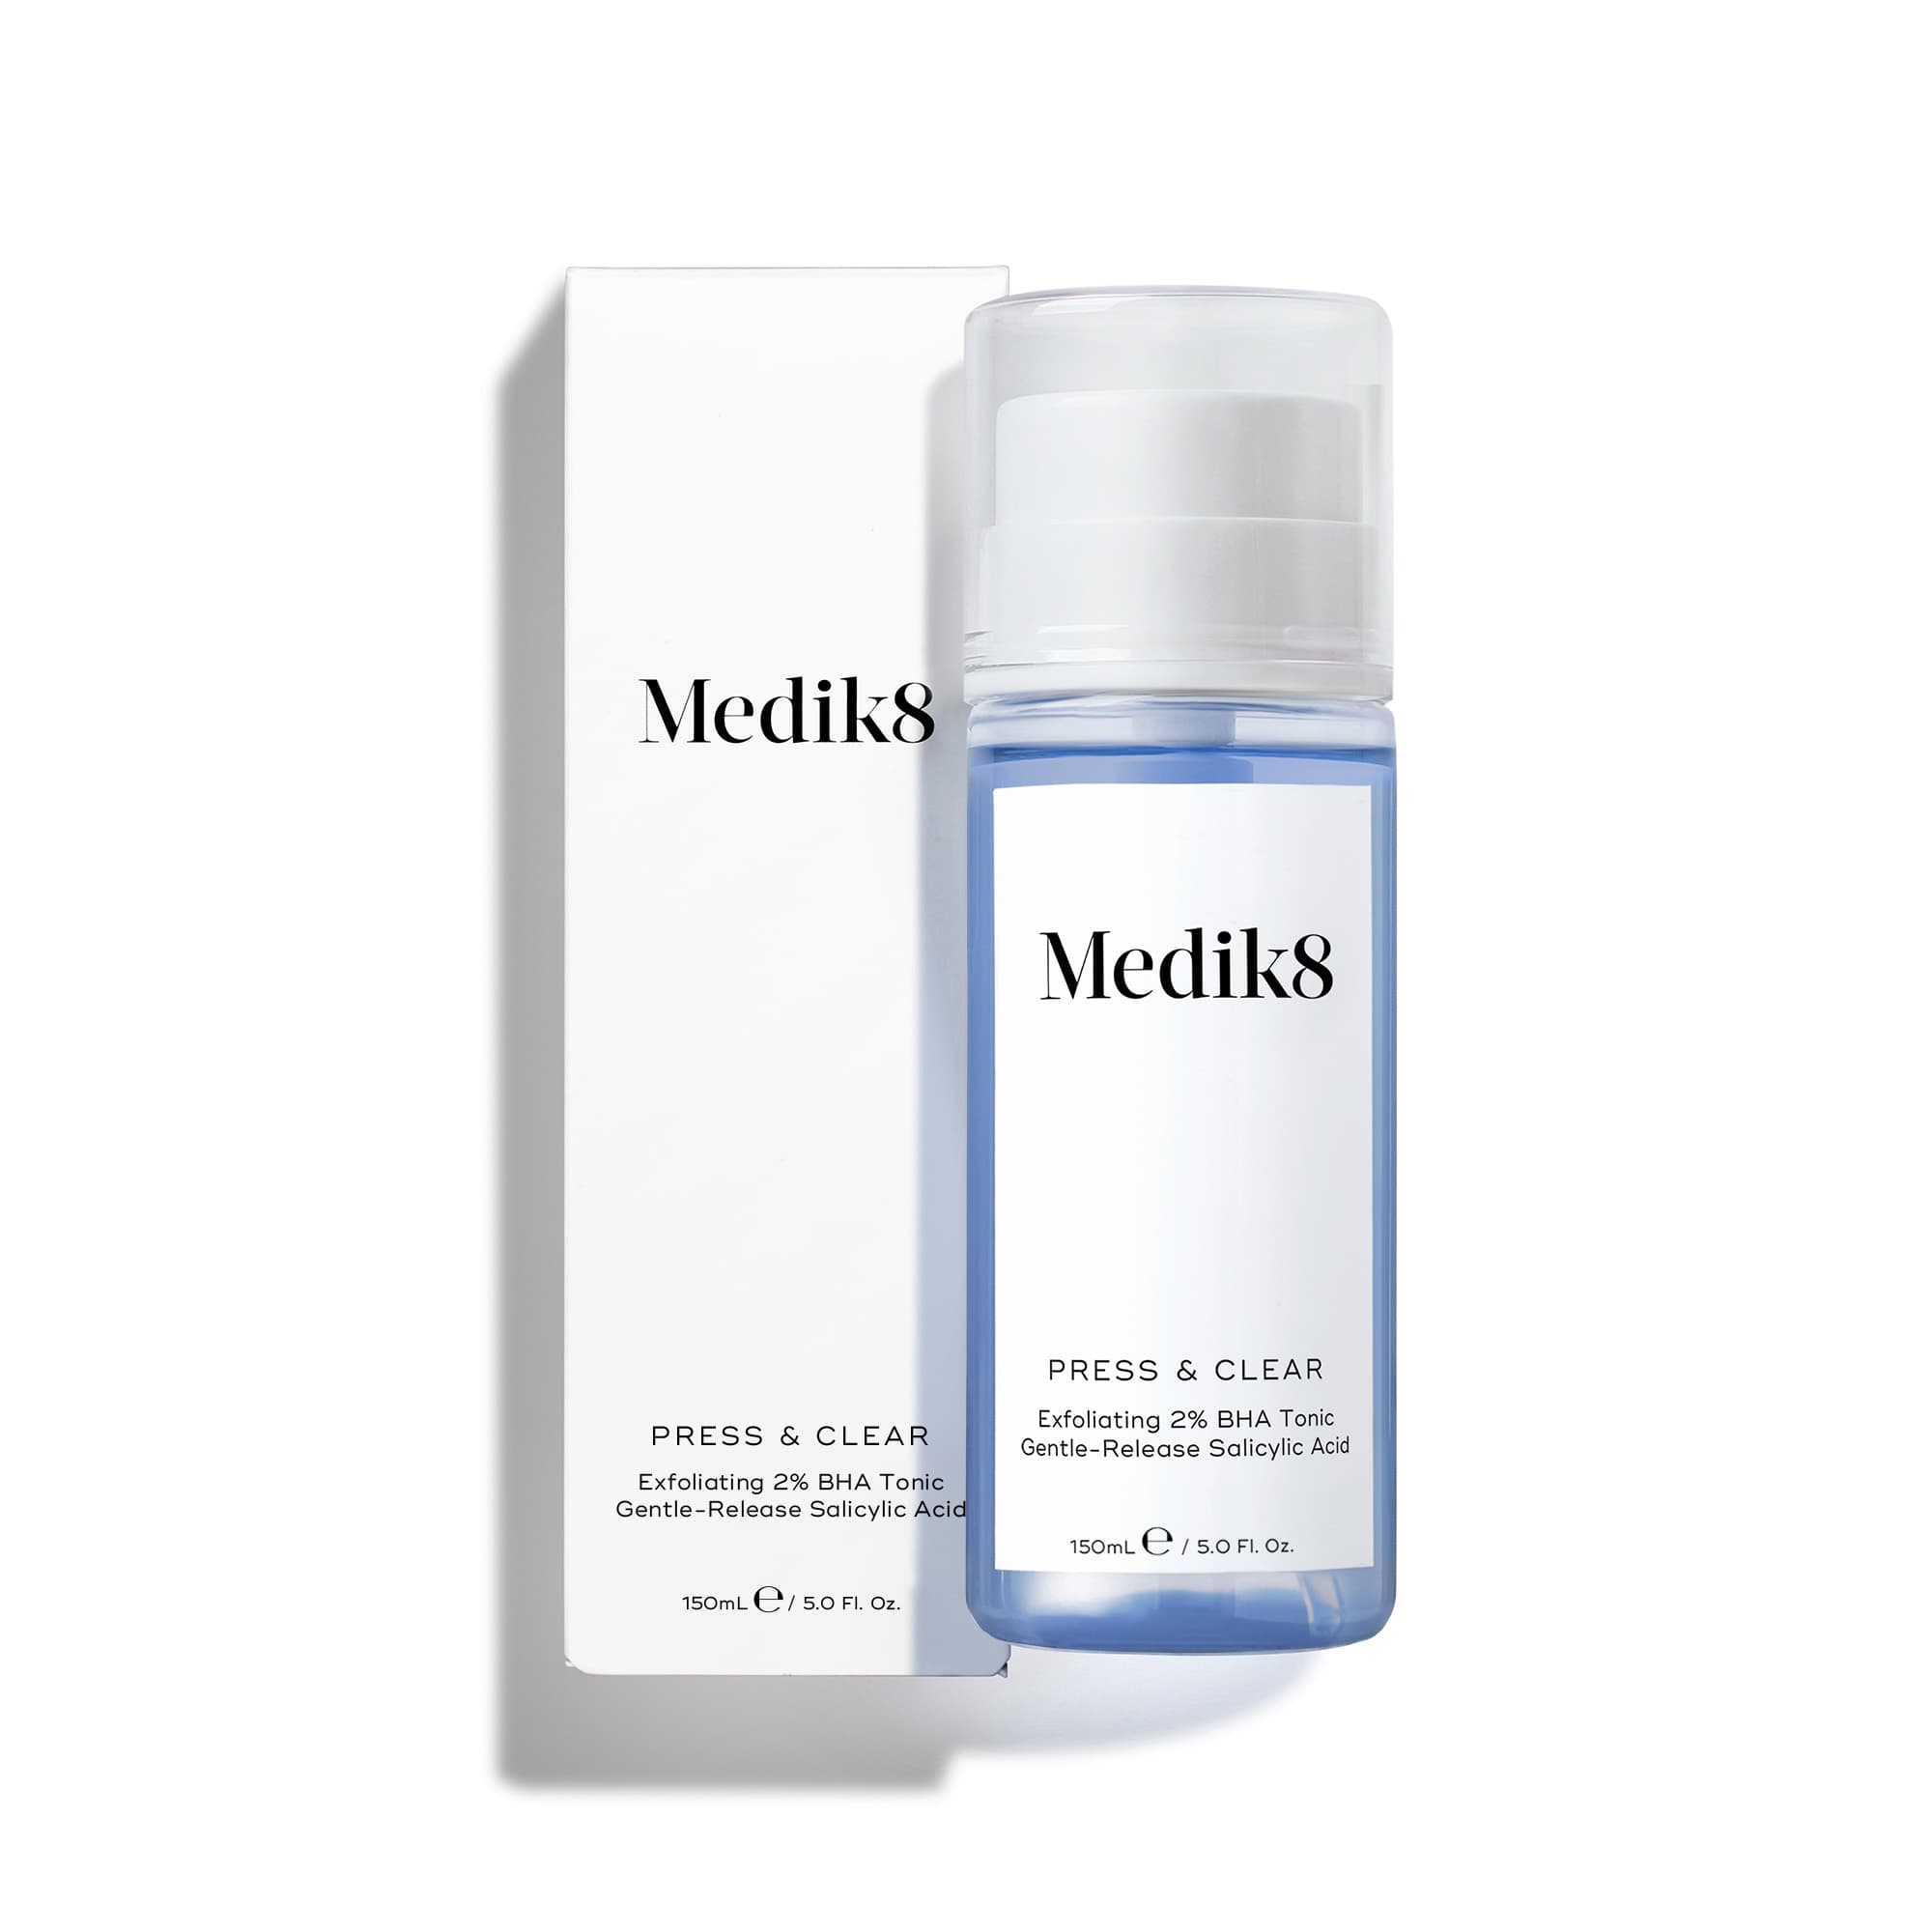 Press & Clear™ MEDIK8 Official Stockist. Worldwide shipping. Medical-grade skincare. The M-ethod Aesthetics